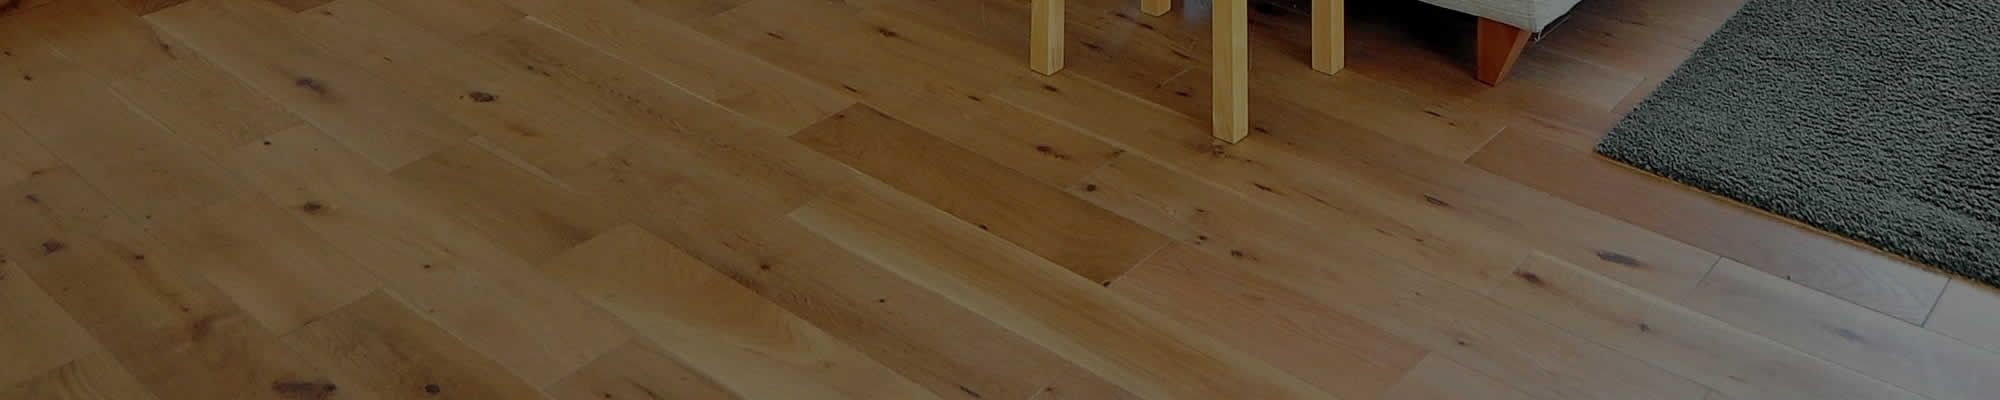 Hardwood Floor Resurfacing Shorewood WI